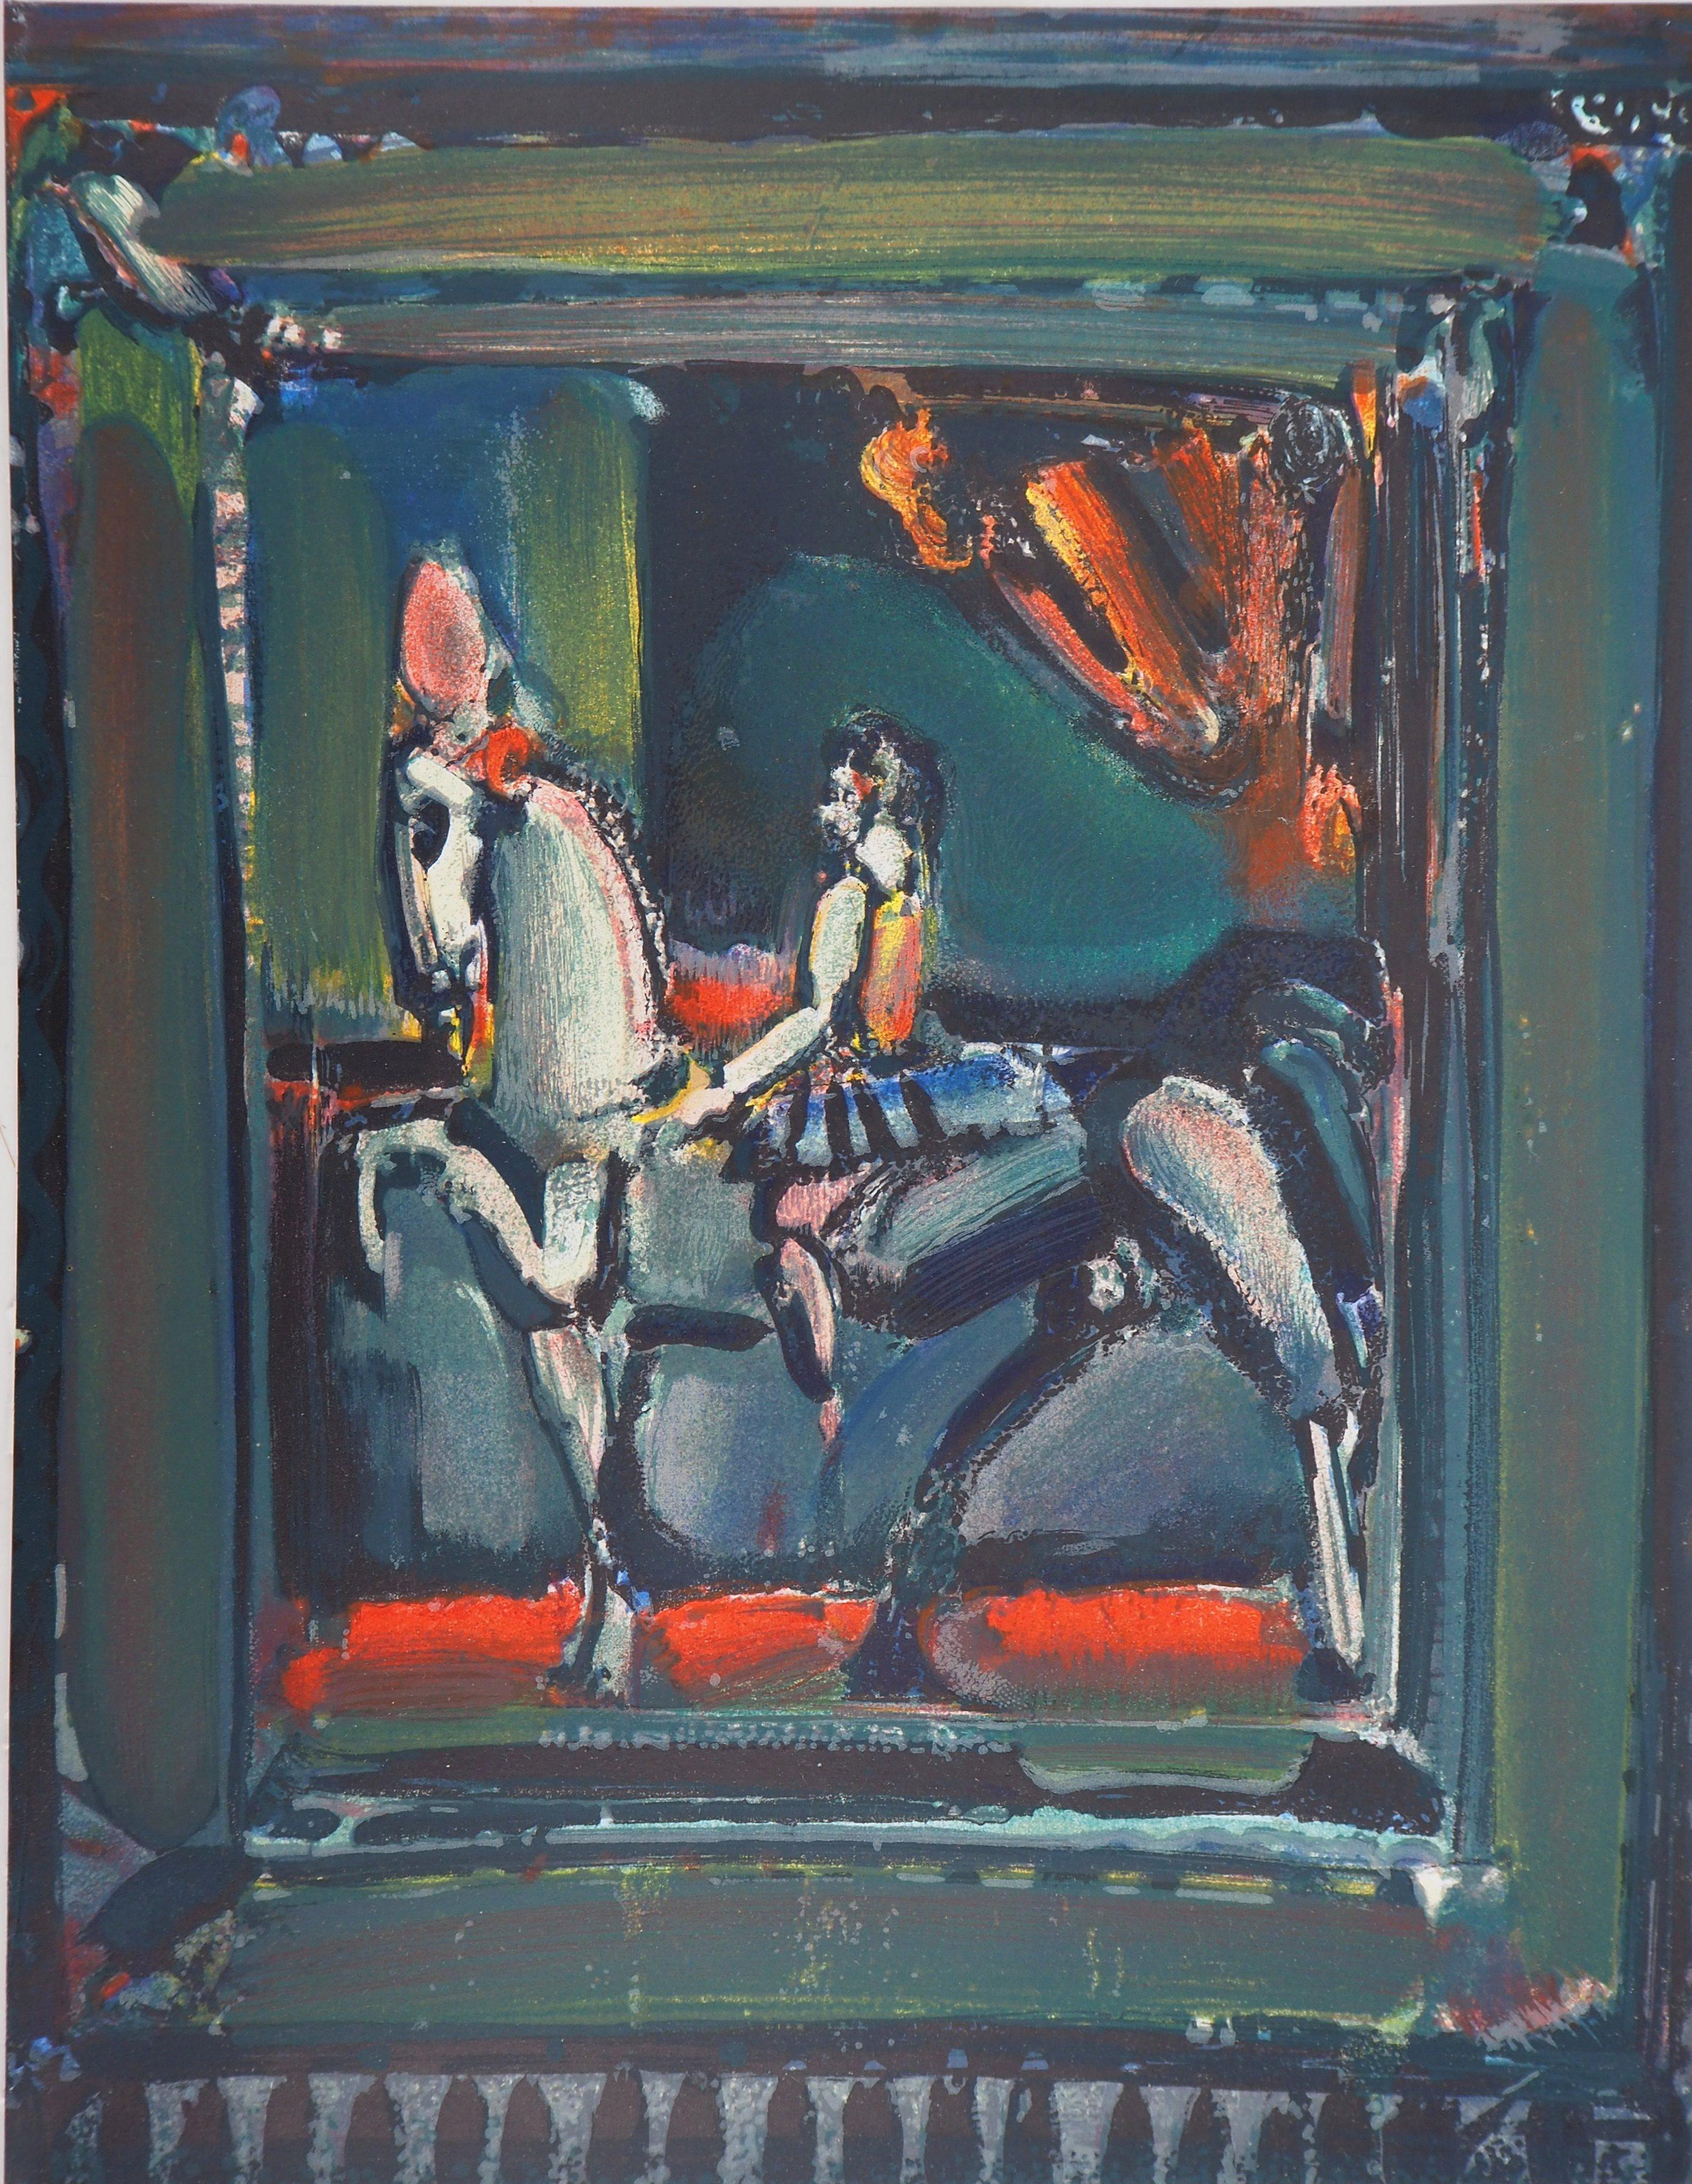 Georges Rouault Figurative Print - The Horse Rider - Original lithograph, Mourlot